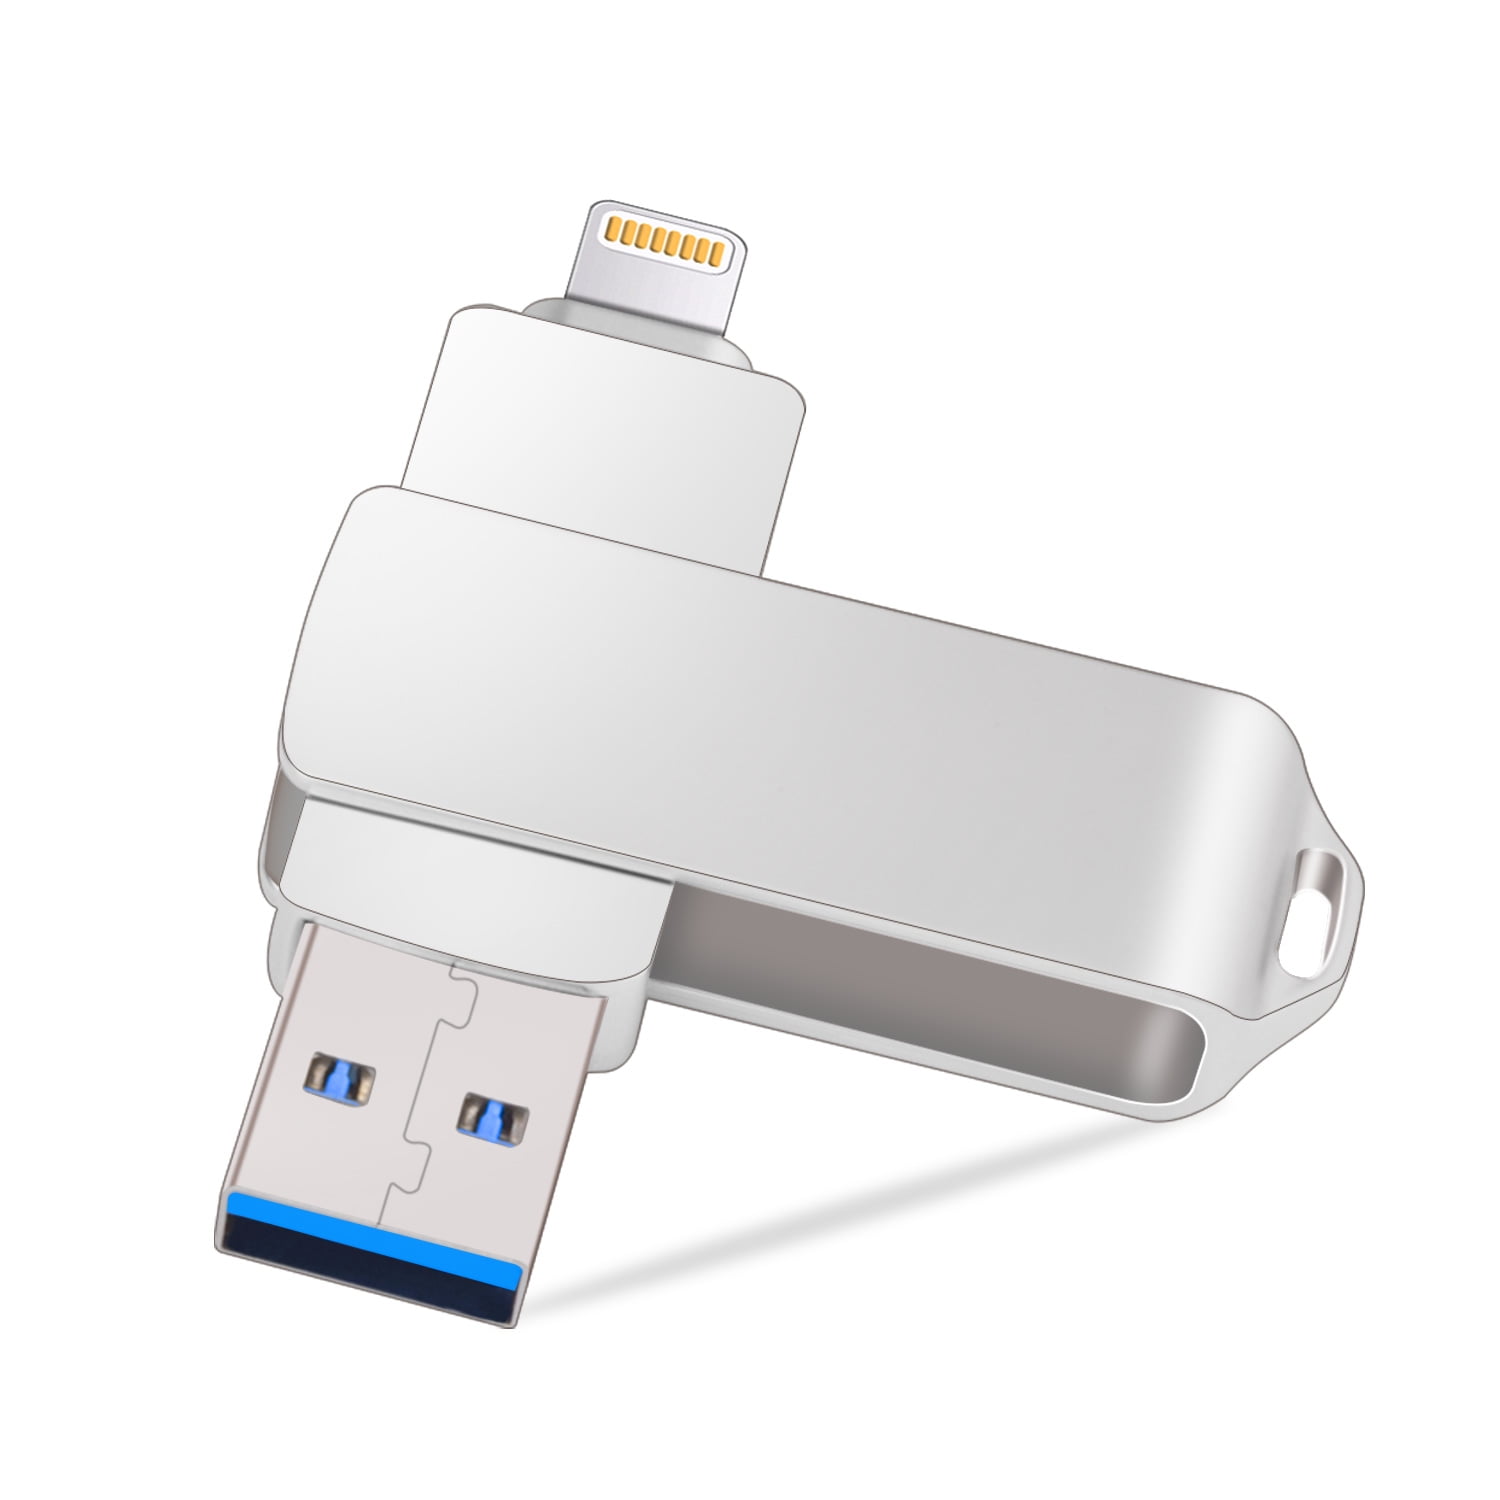 YOHU 256GB Pendrive para iPhone Photo Stick Memoria USB para iPhone y iPad Android Laptops Flash Drive Expansión Rosa